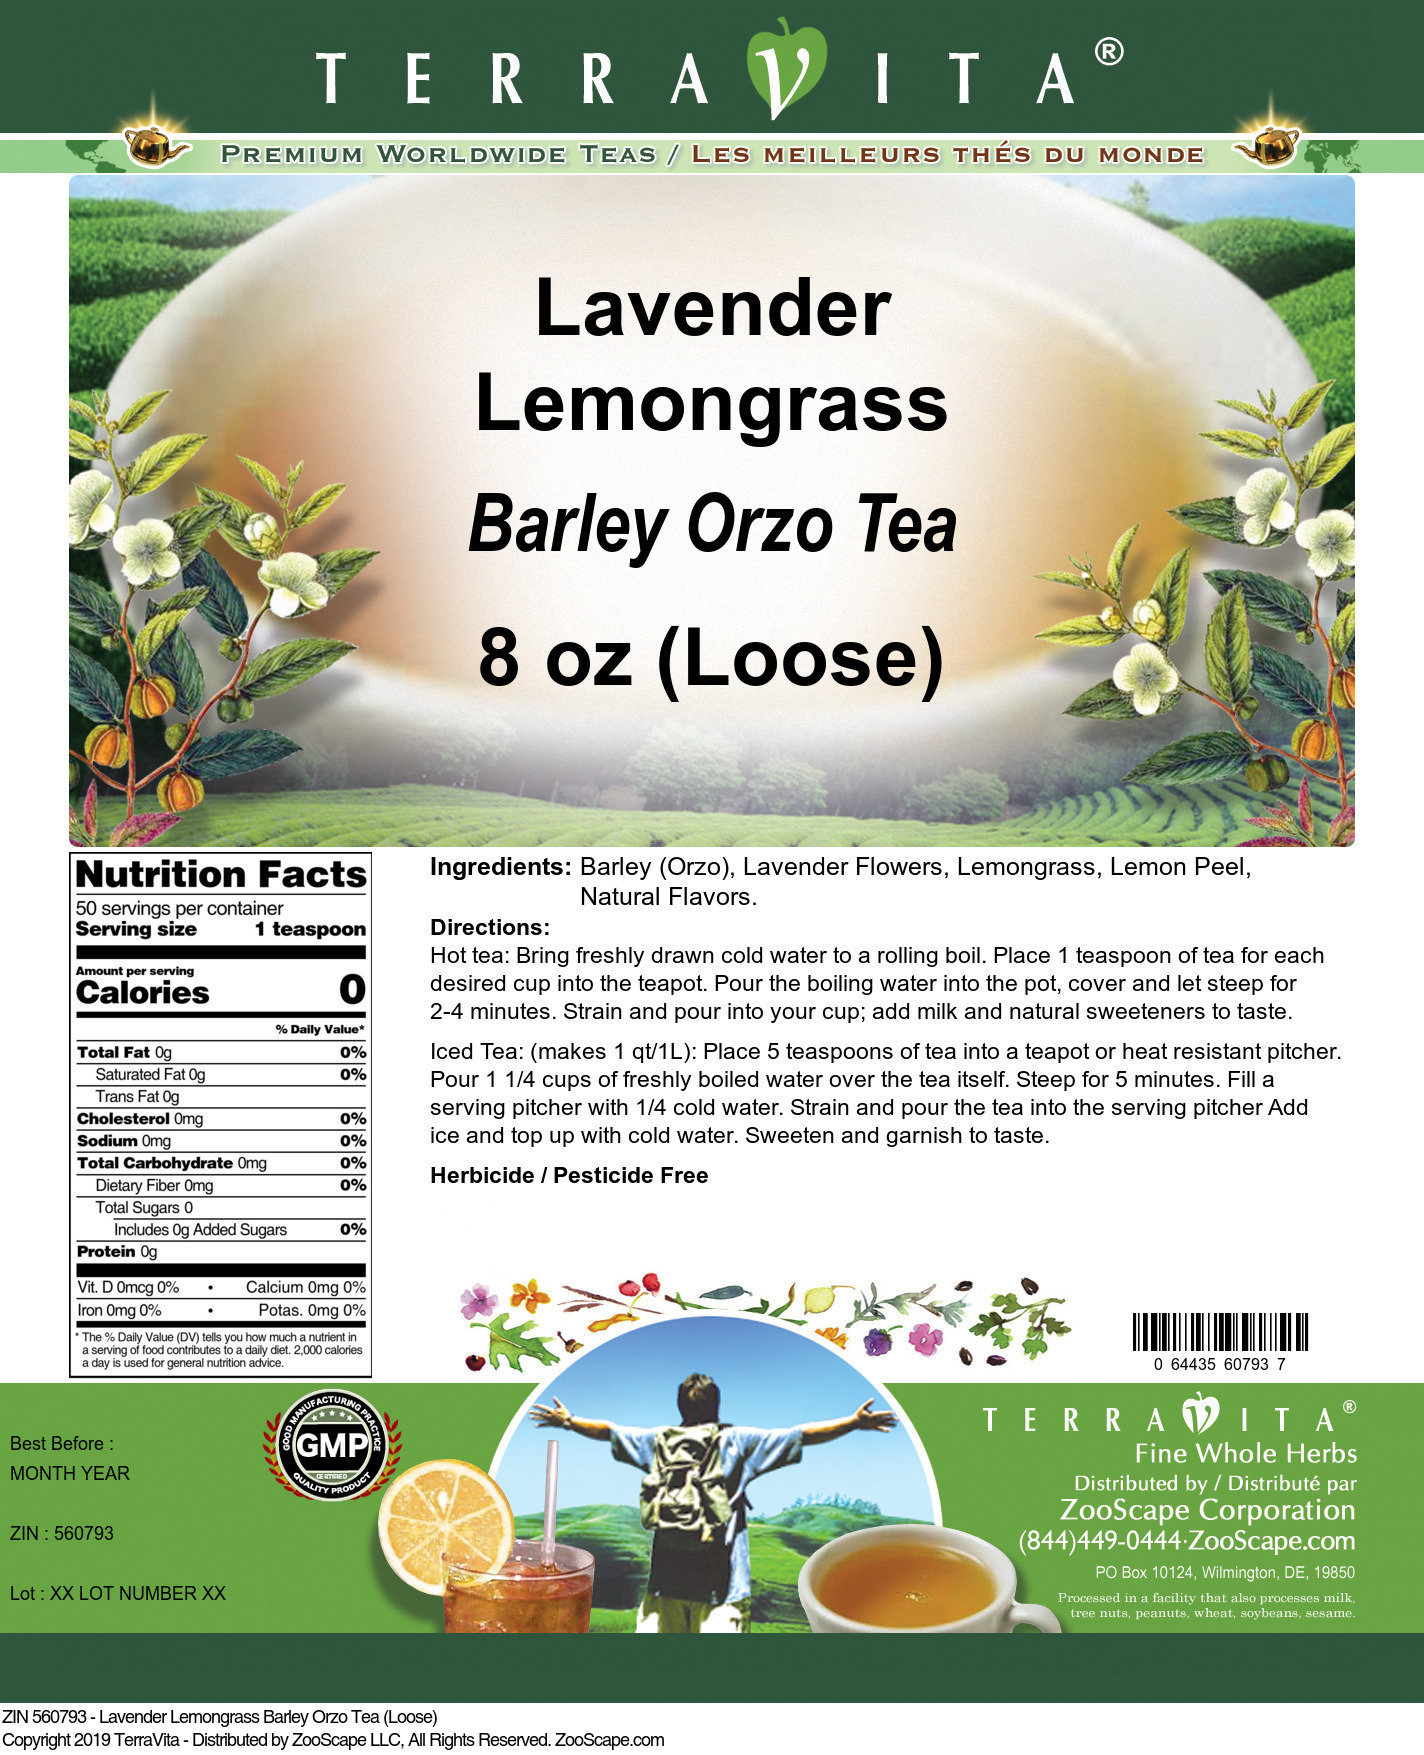 Lavender Lemongrass Barley Orzo Tea (Loose) - Label